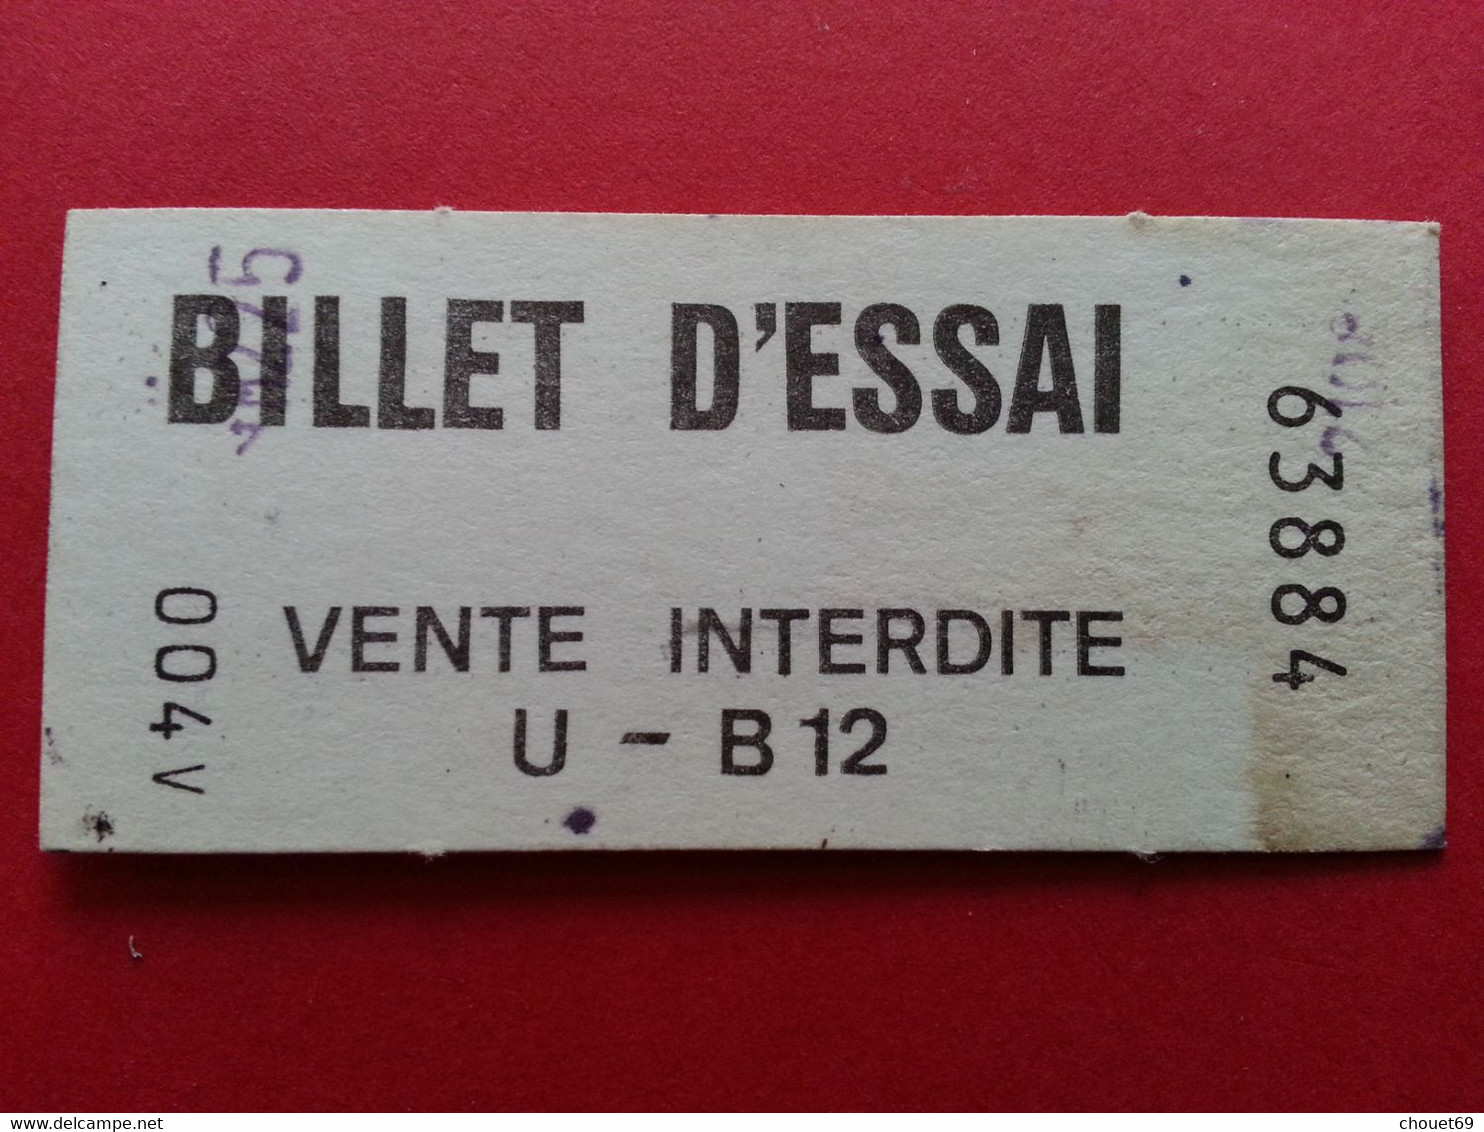 BILLET D ESSAI VENTE INTERDITE - U - B12 - 004V - Paris ? RATP ? Utilisé (H0621 - Europa